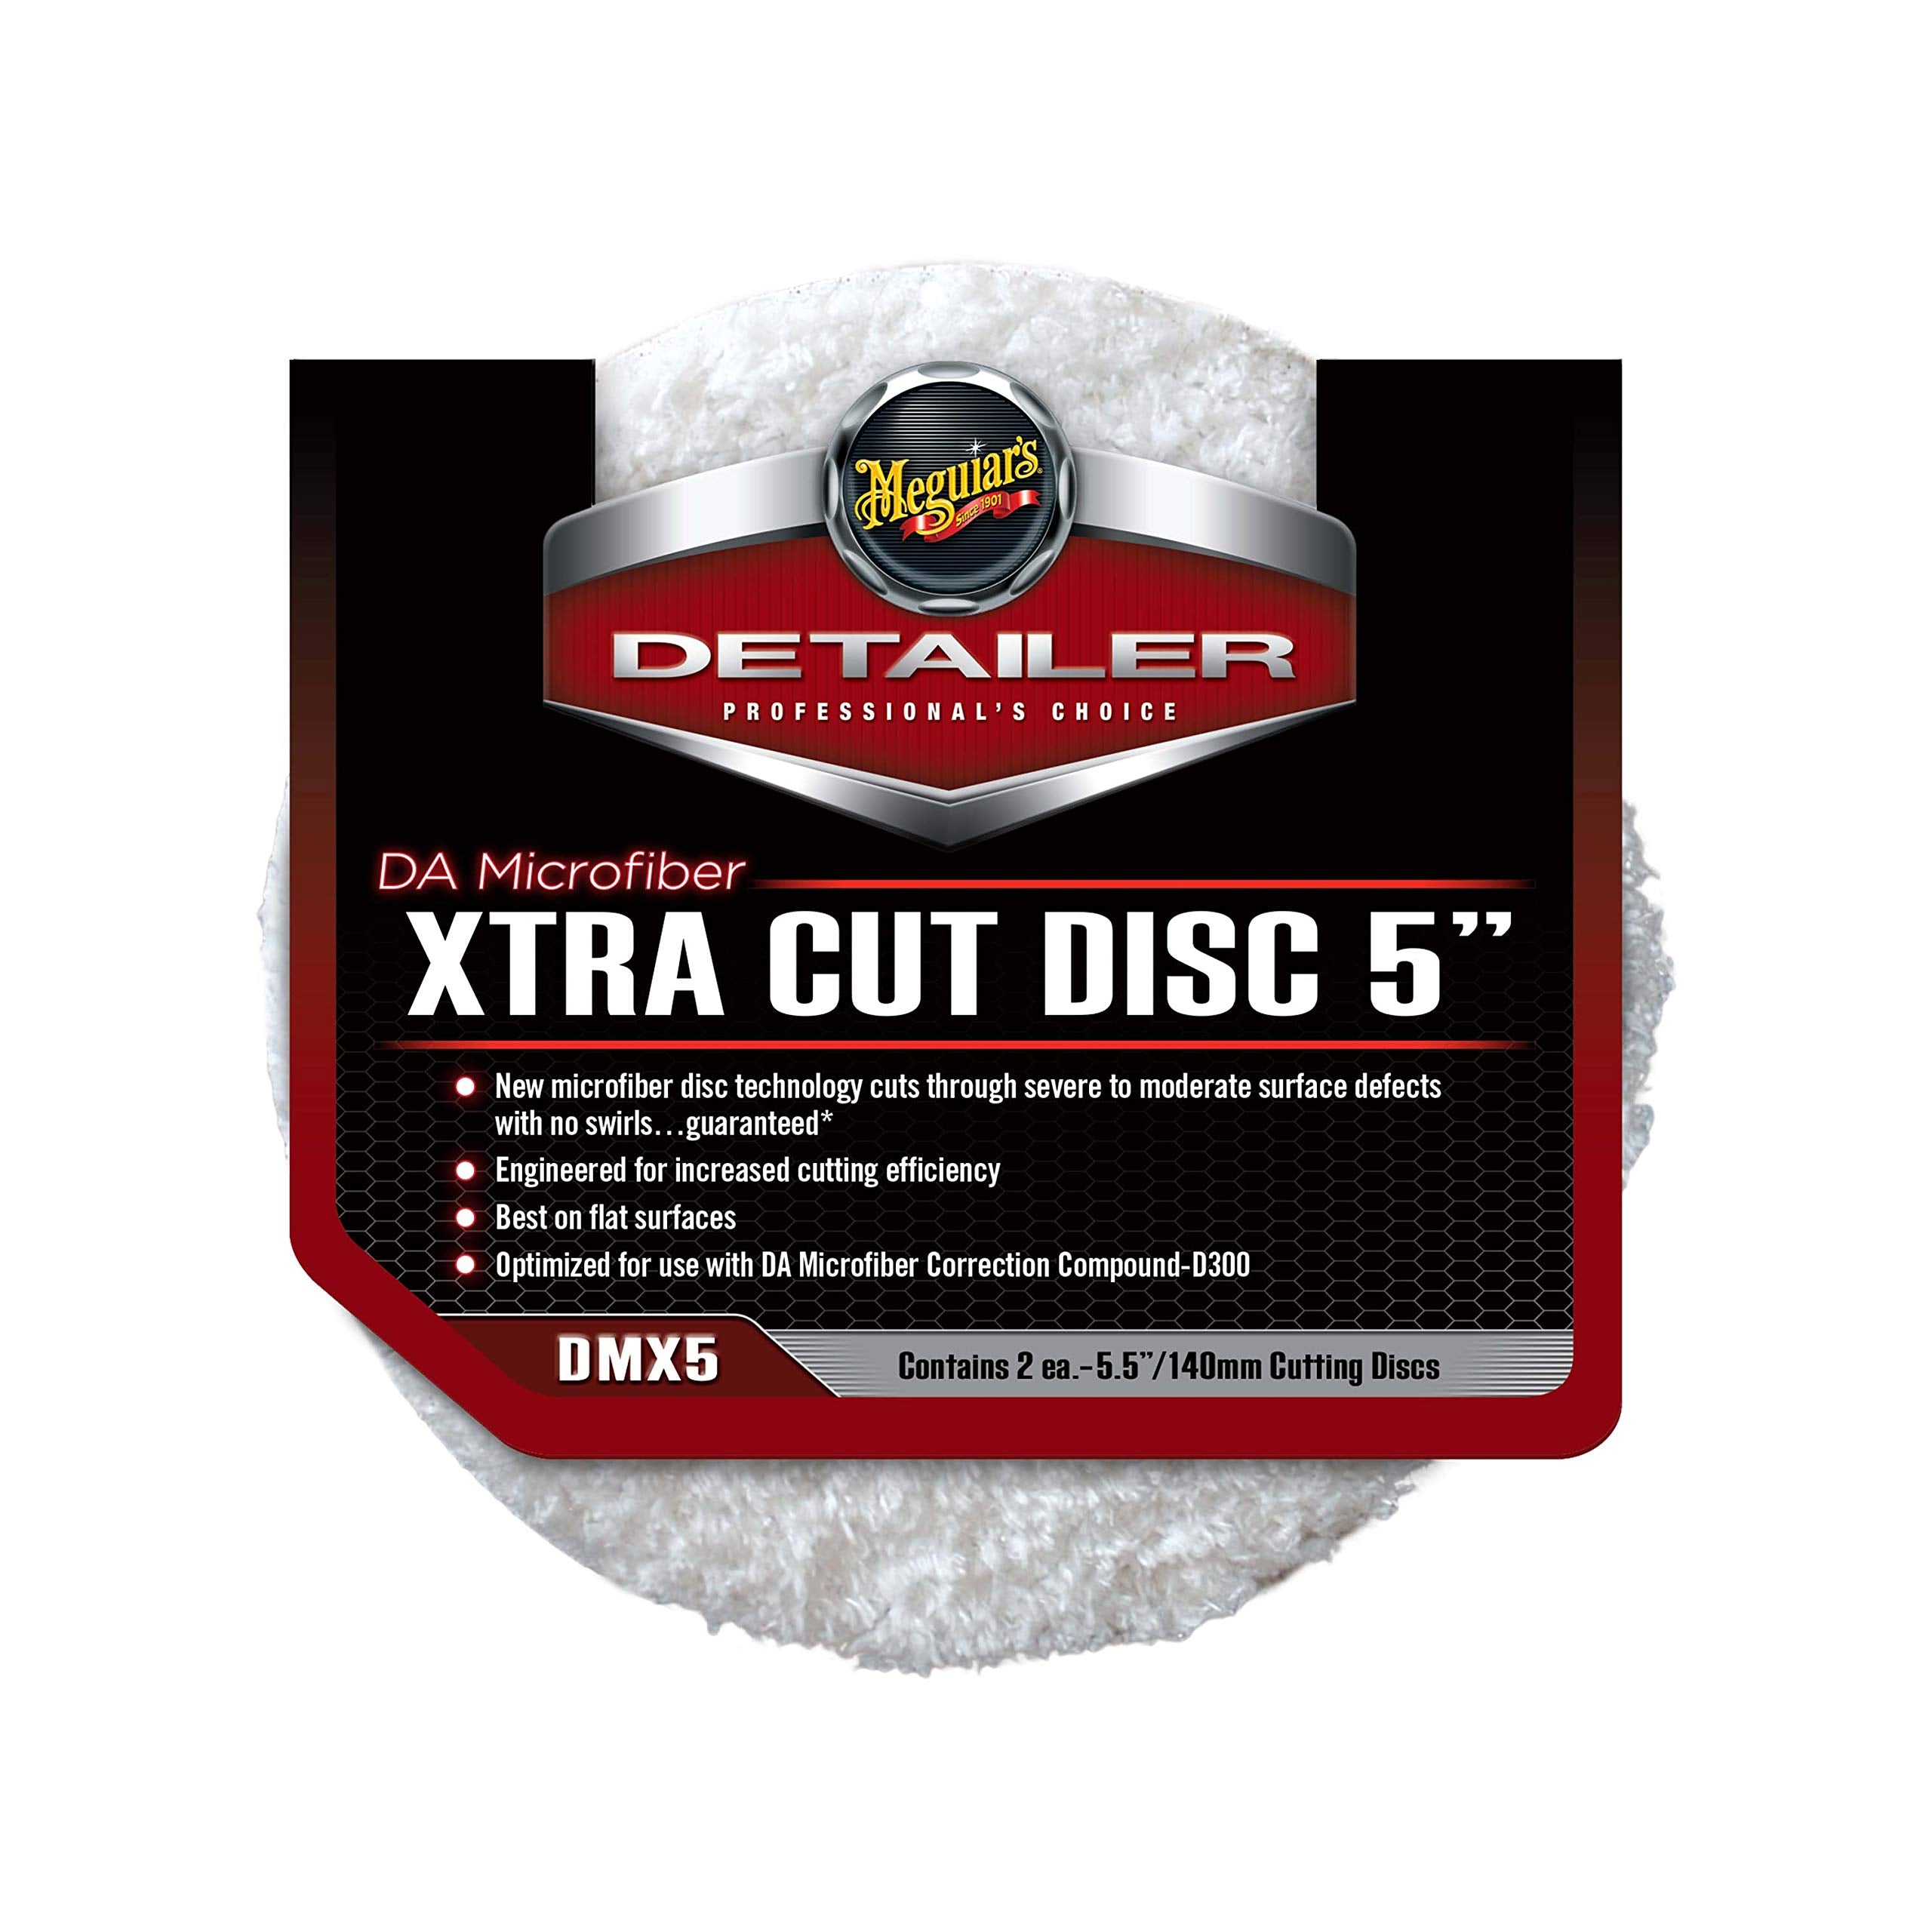 Bonete Microfibra Corte Xtra Cut 5 (DMX5) Meguiar’s